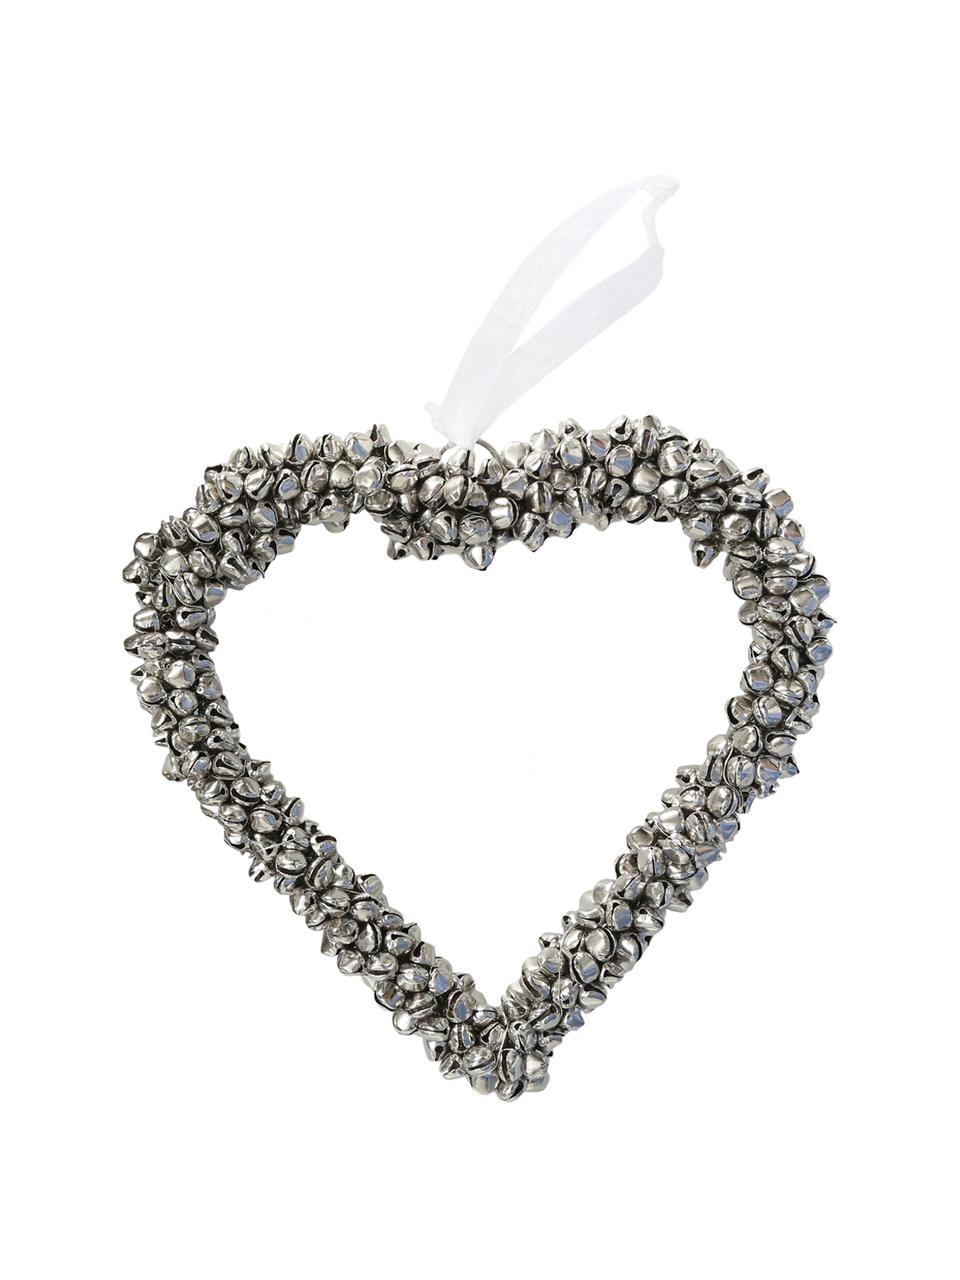 Sada dekorací ve tvaru srdce Halina, 3 díly, Stříbrná, bílá, Sada s různými velikostmi